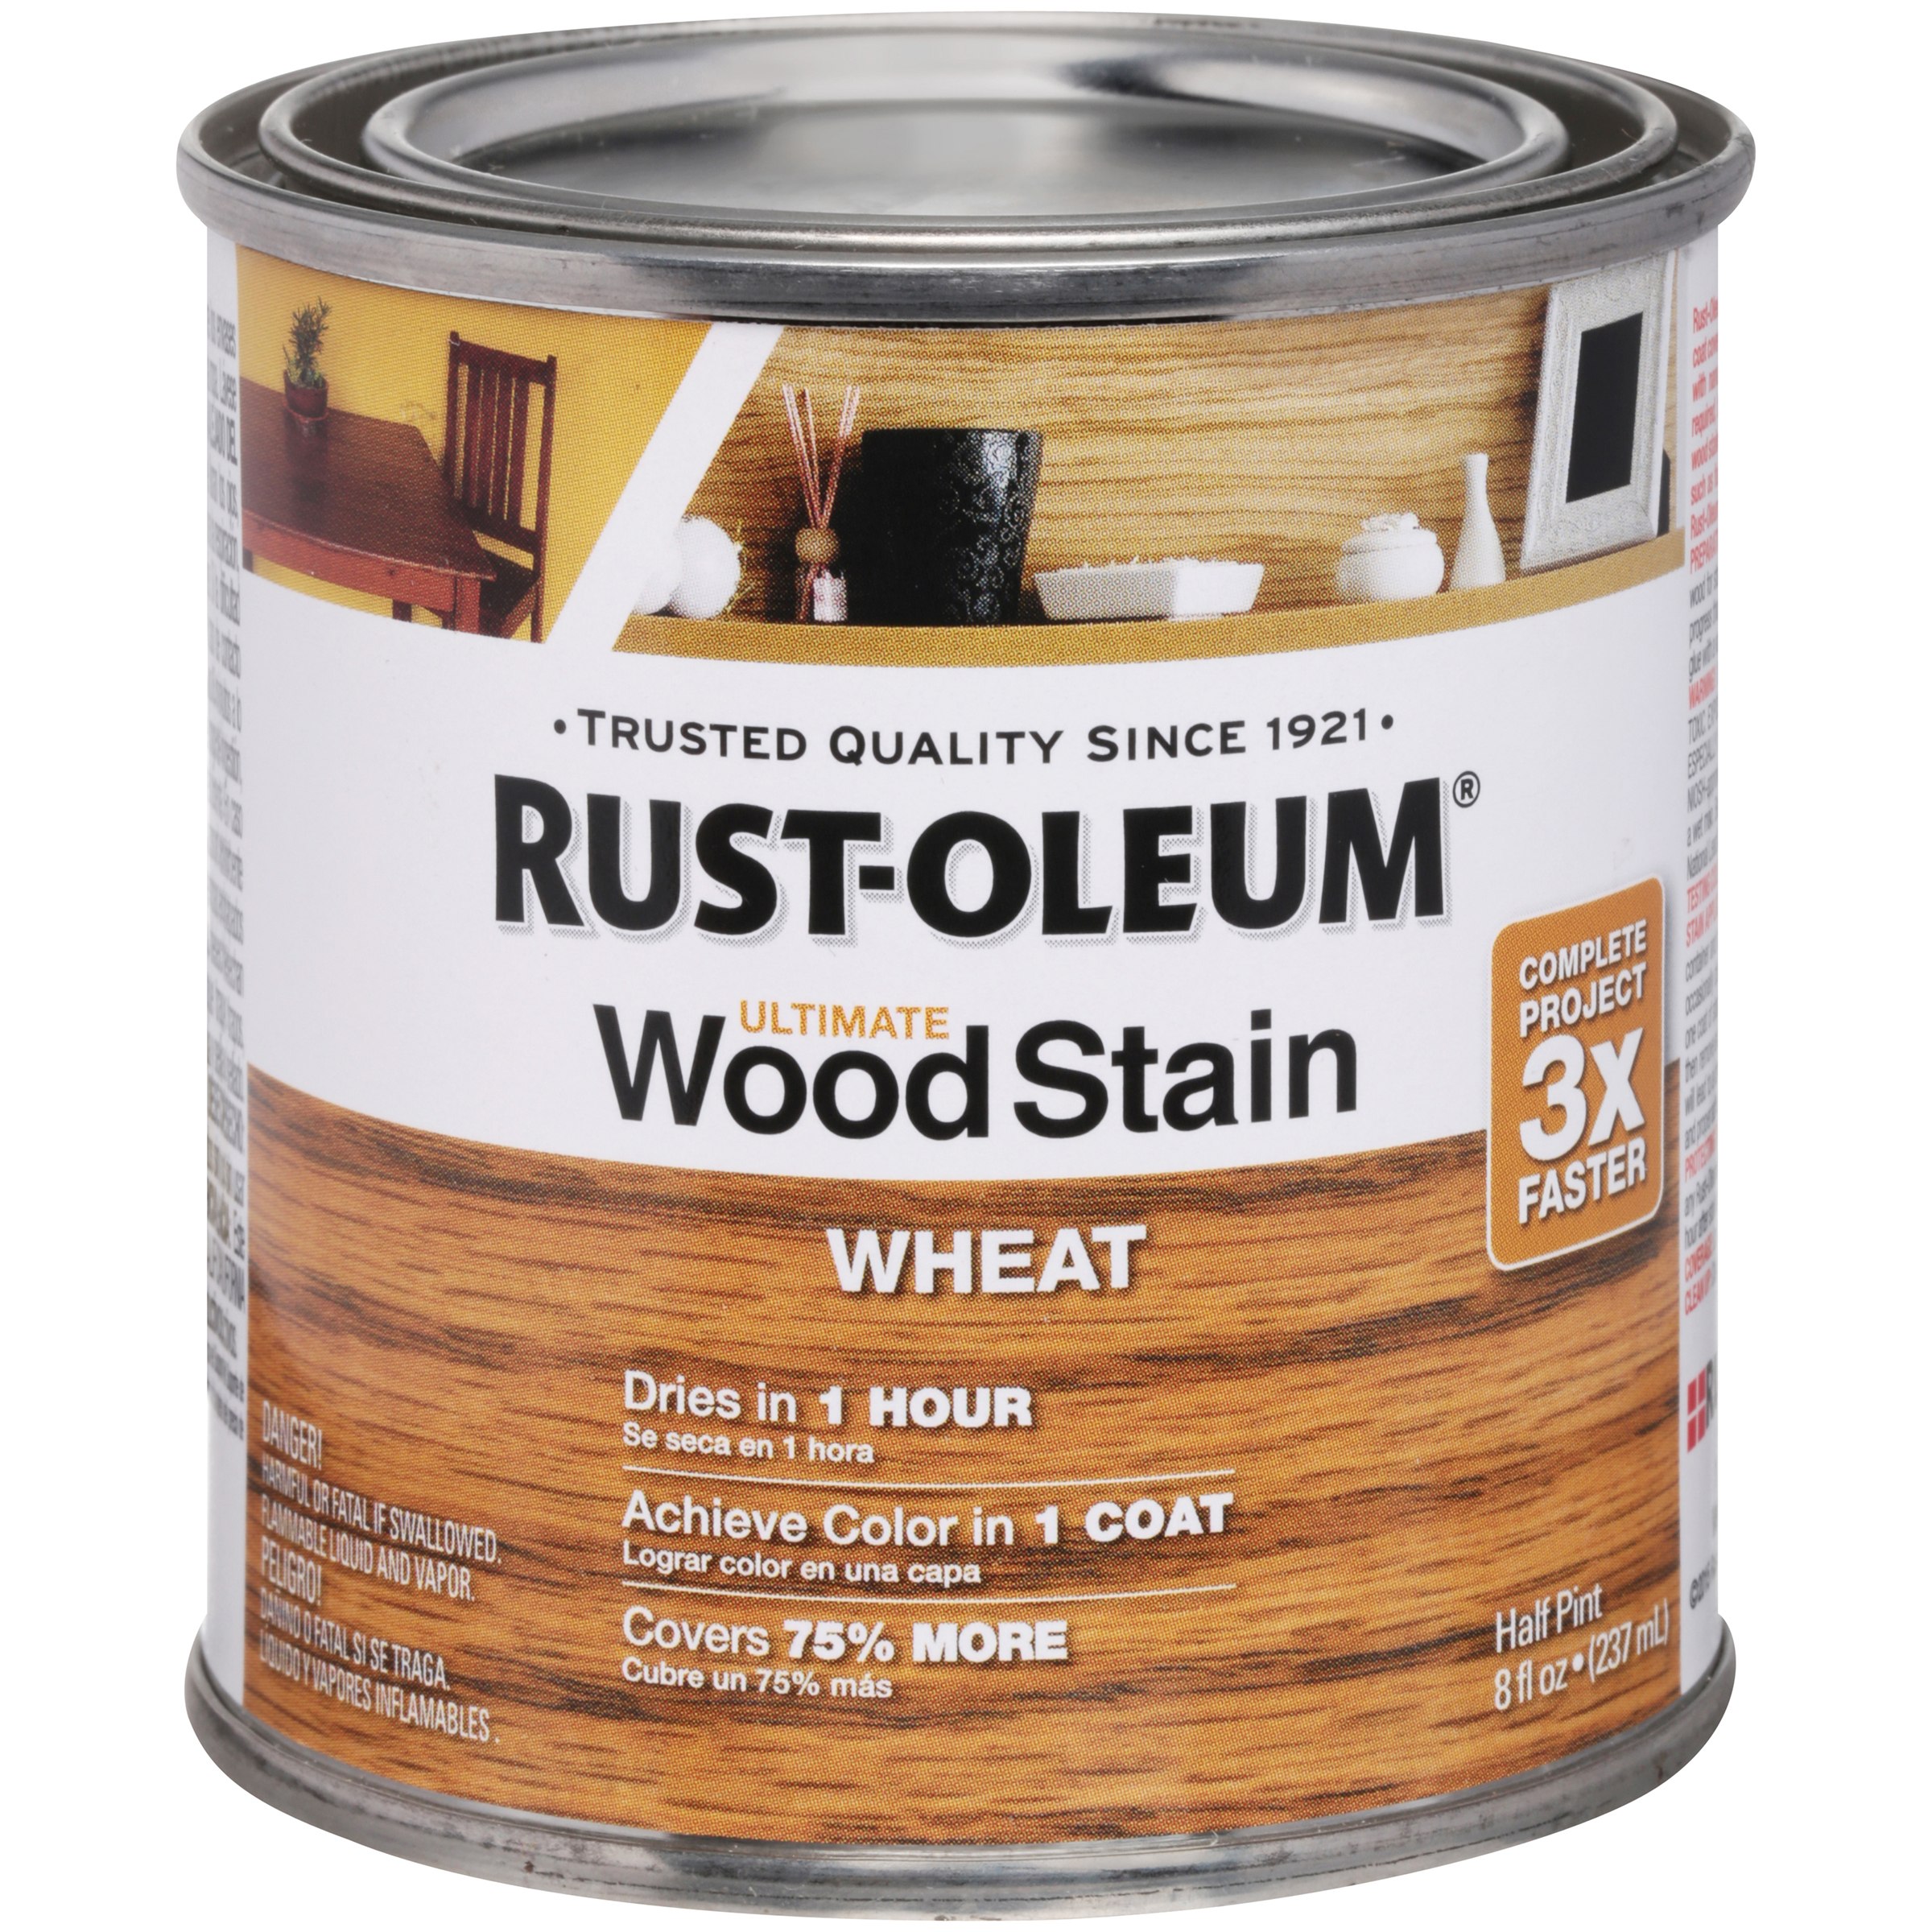 Rust-Oleum Wheat Wood Stain, 8 fl oz - image 1 of 4